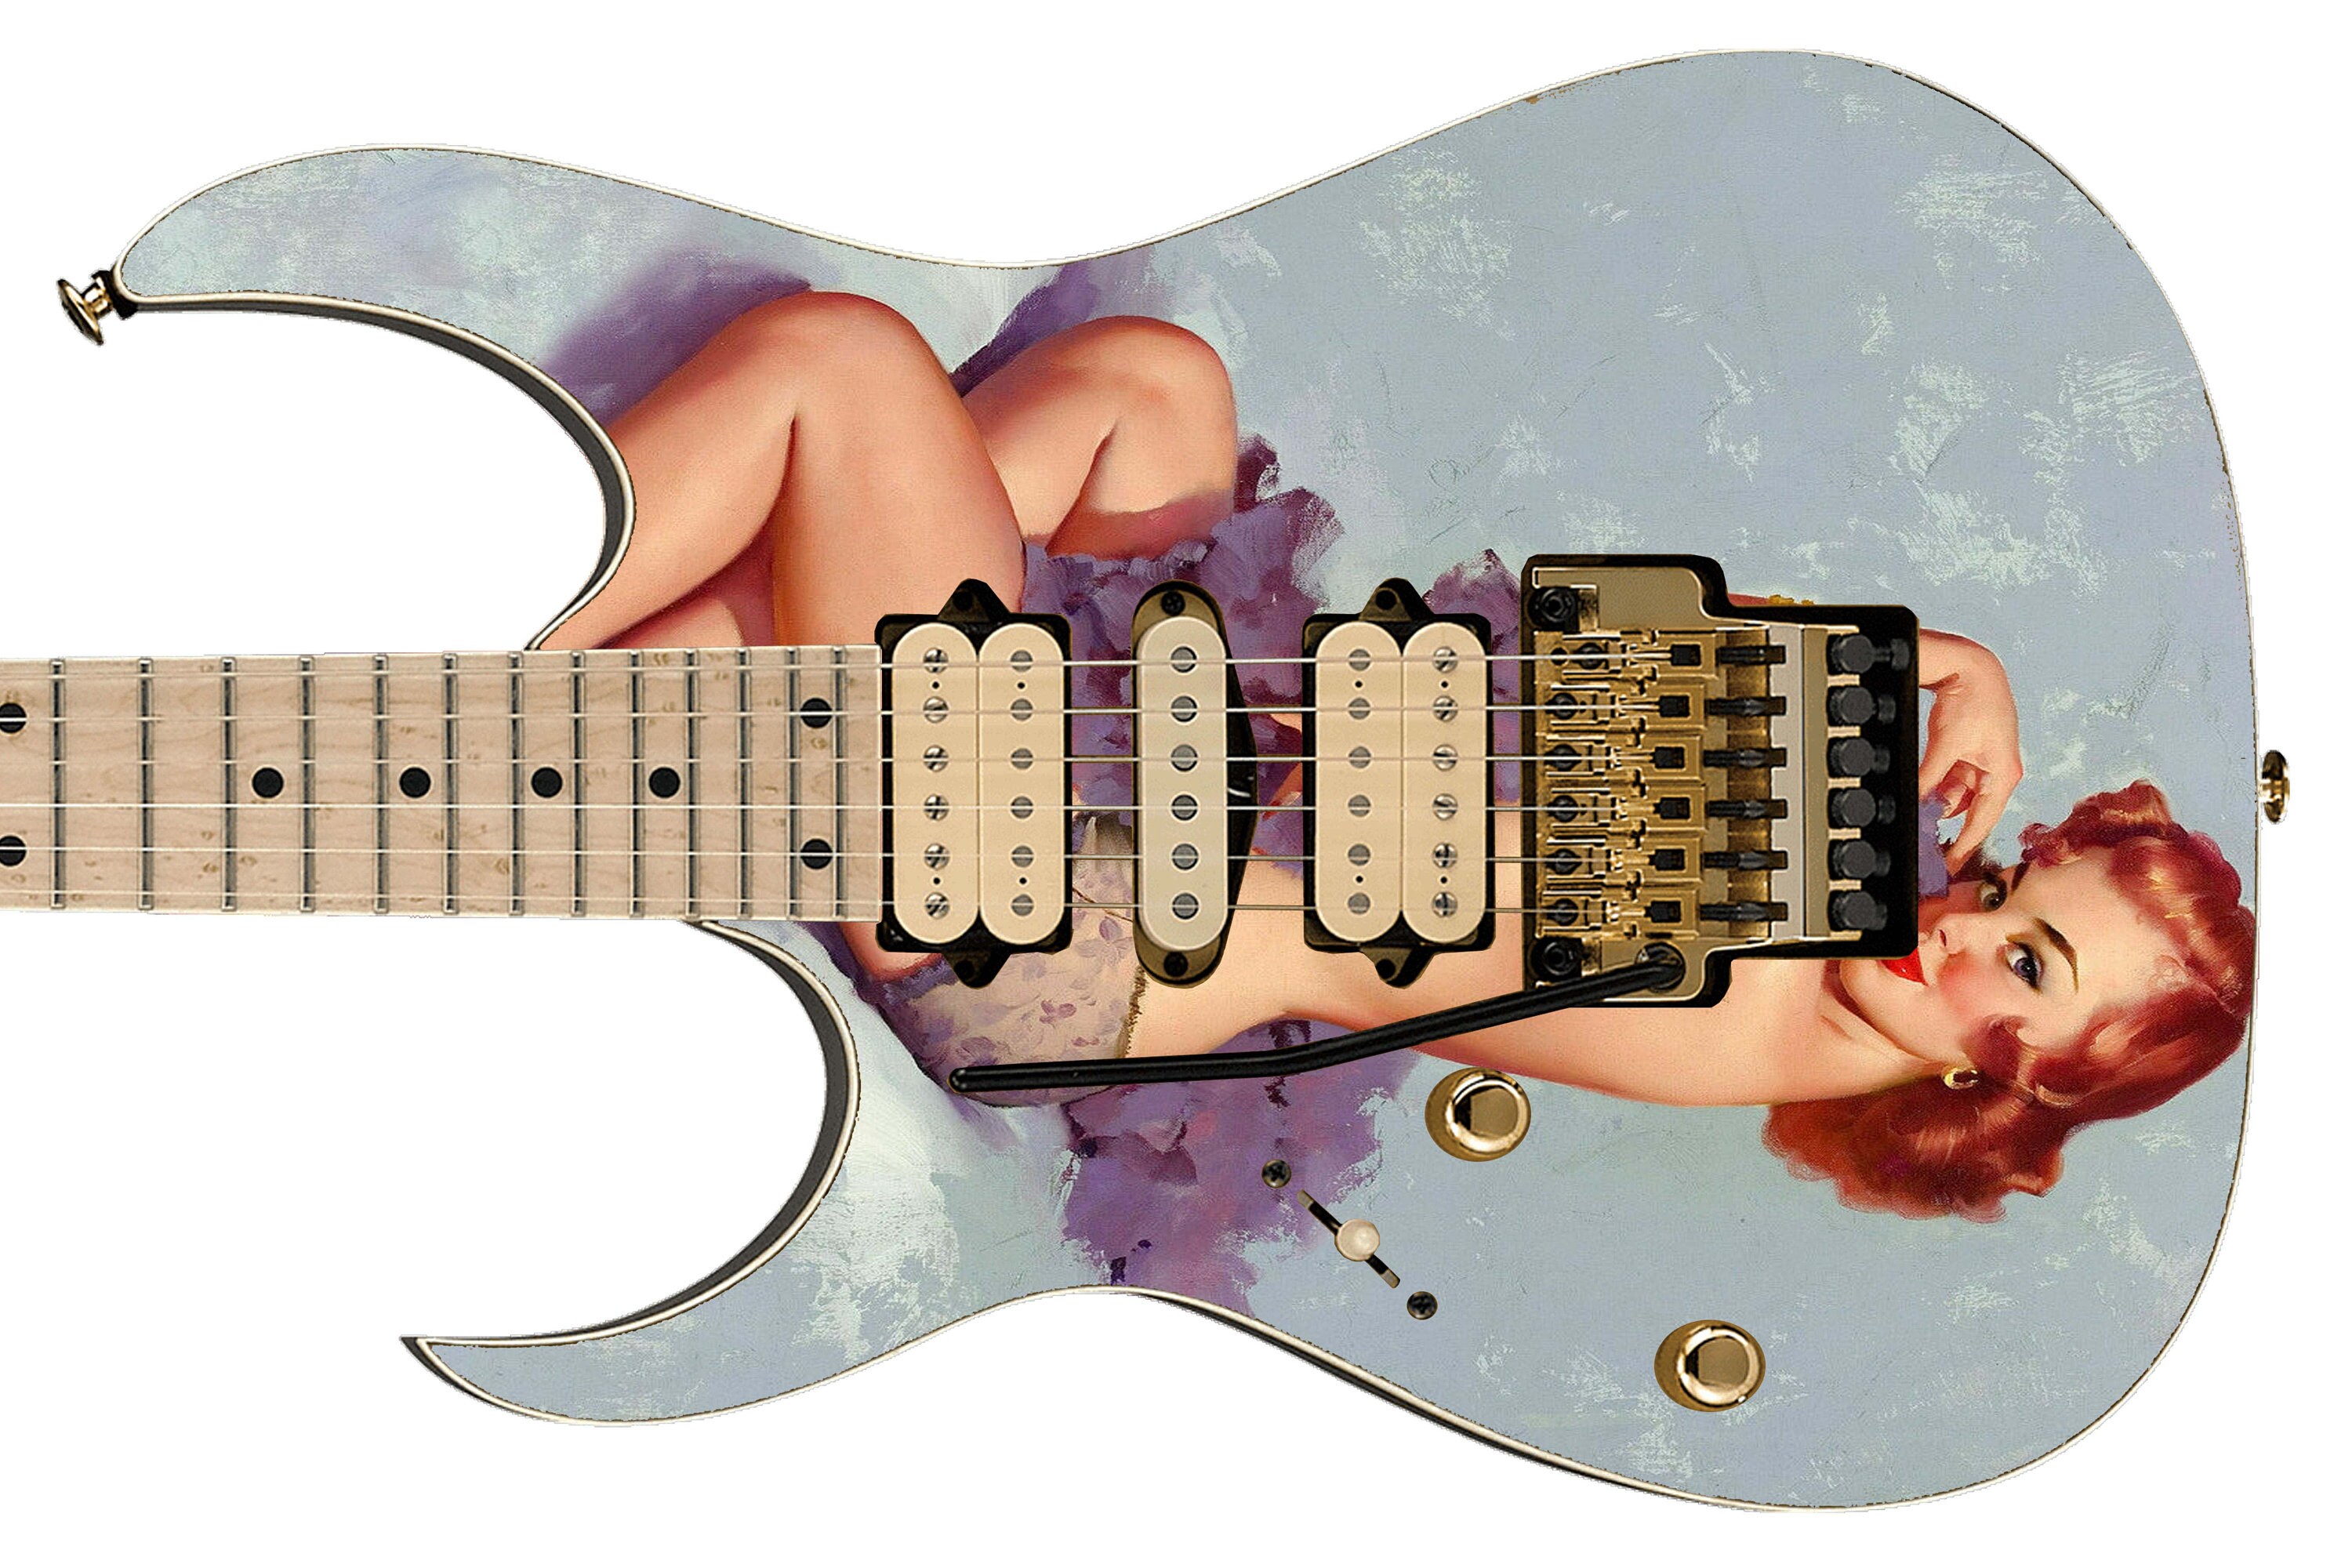 Epic Customs - Bape Shark x LV inspired guitar wrap.